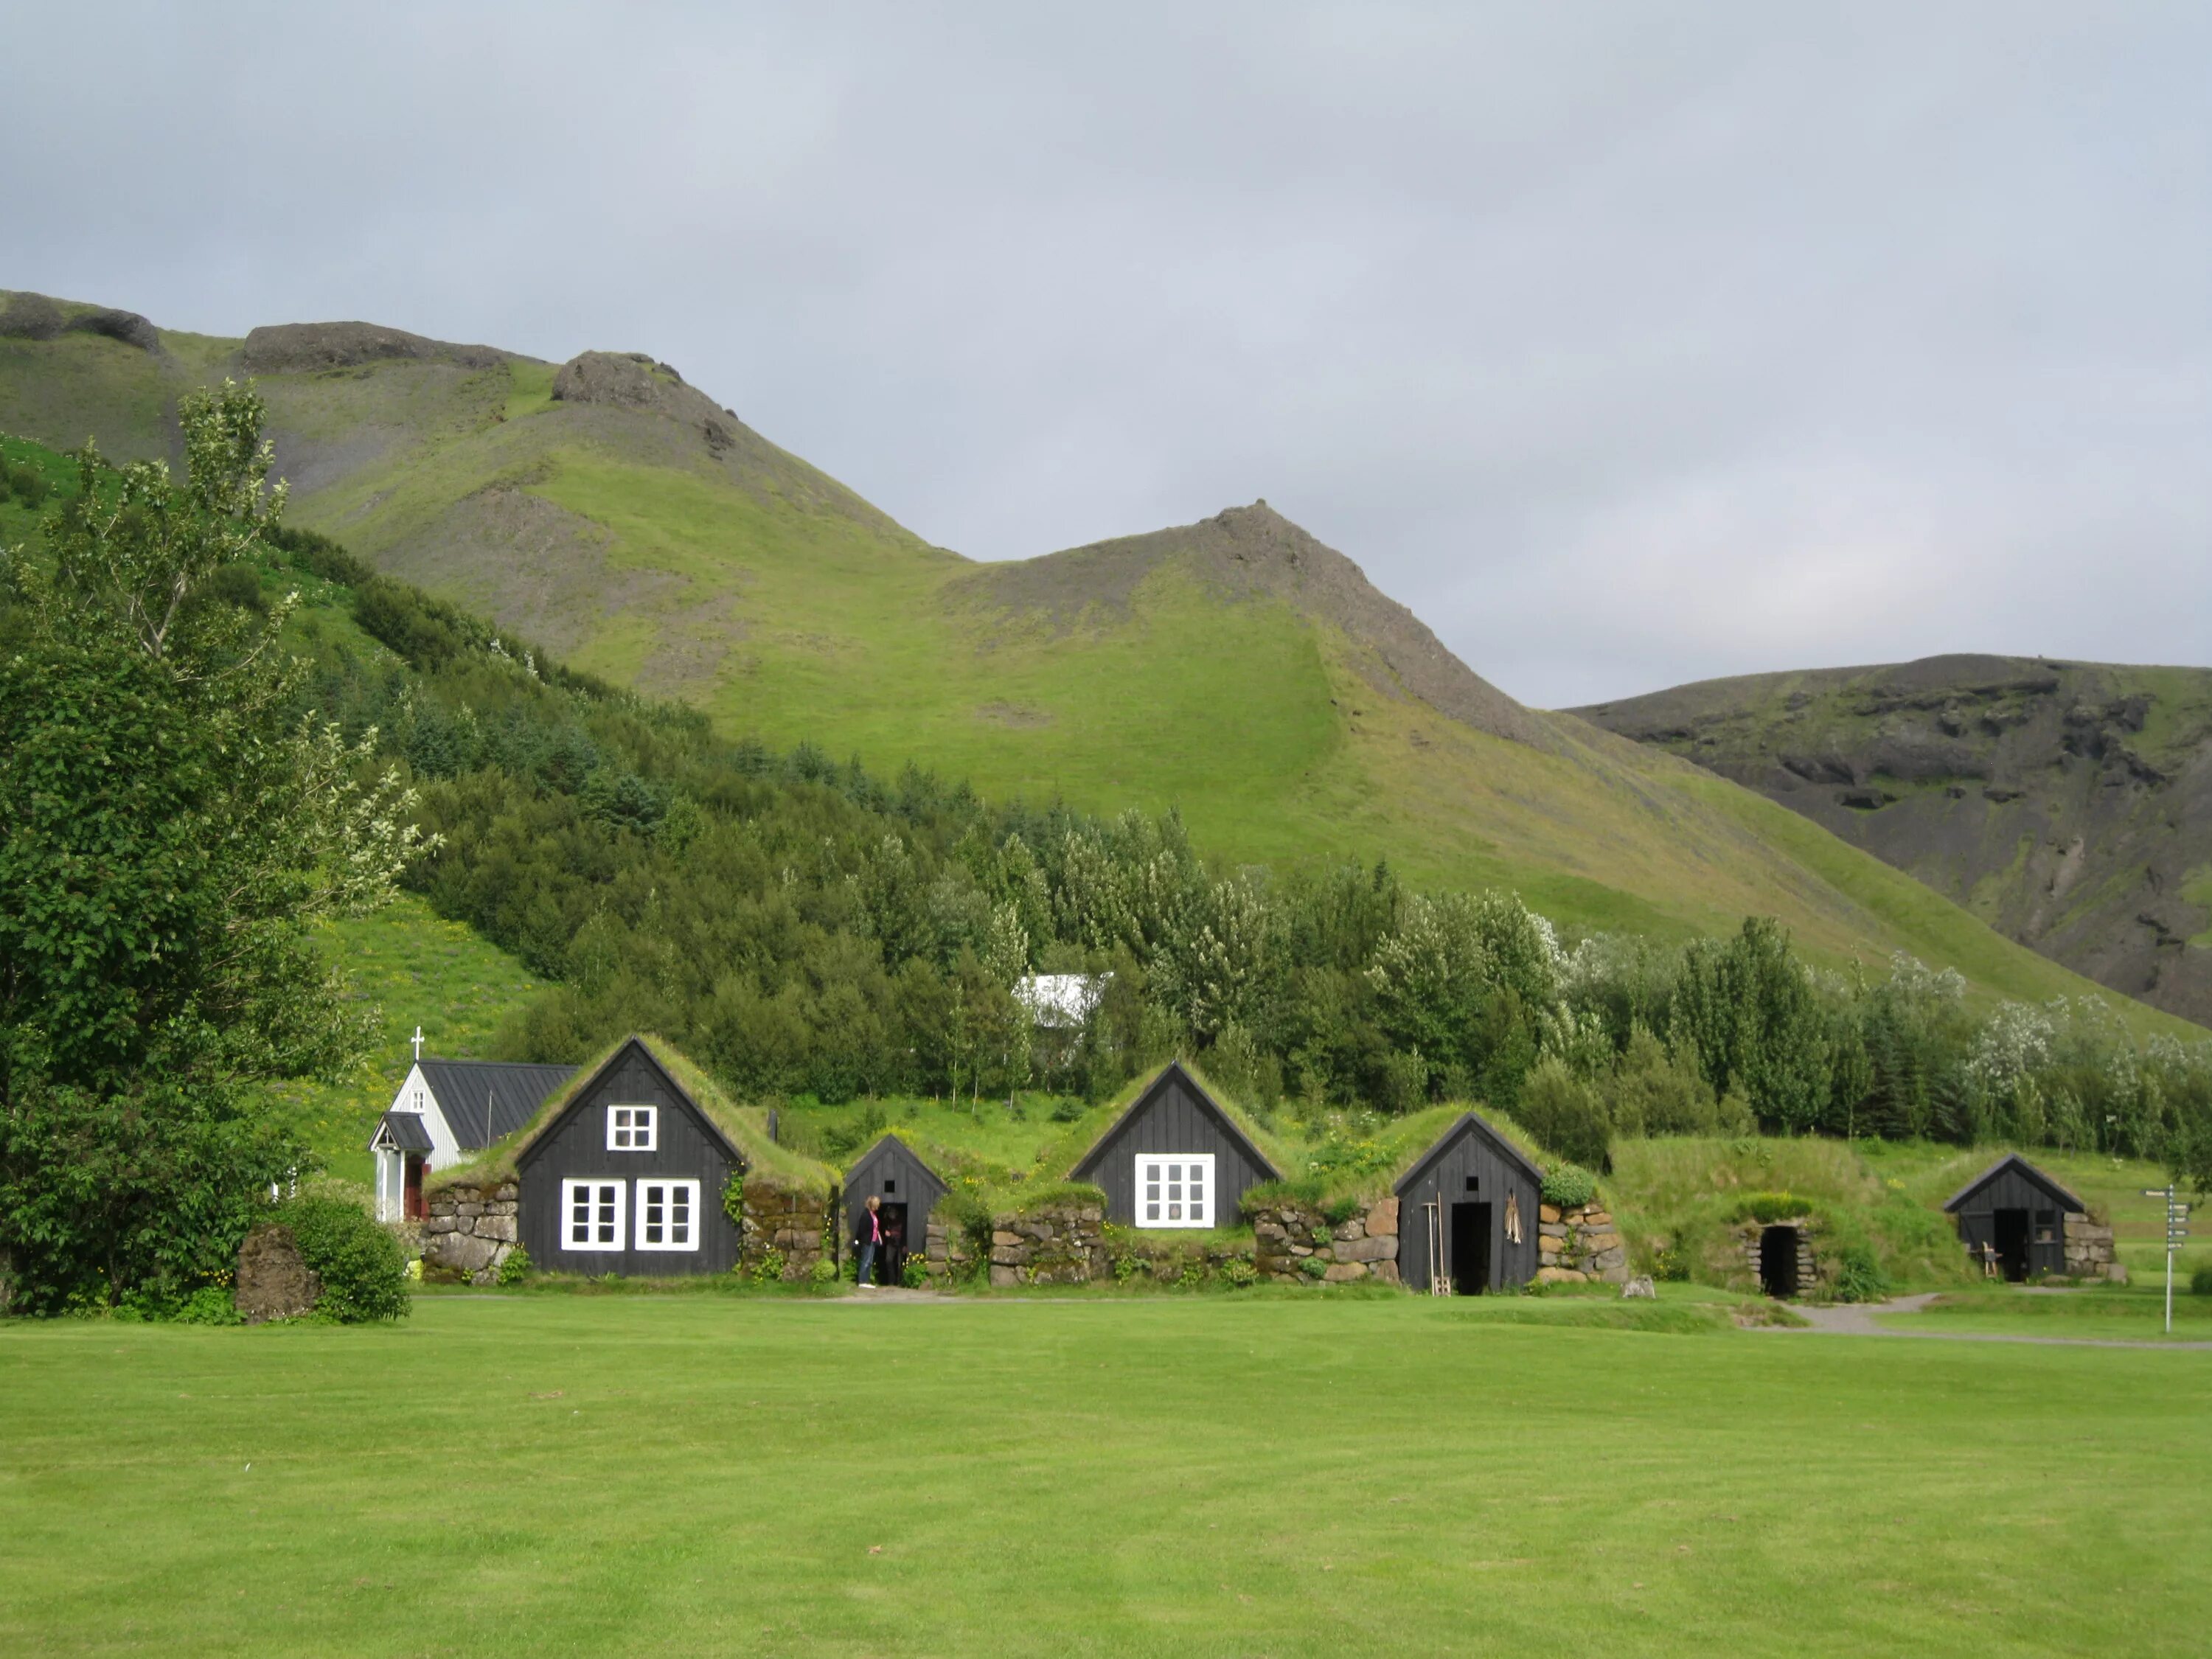 Окна холм. Исландия лето гора домик. Ферма в Исландии. Исландия сельский дом. Исландия зелень.